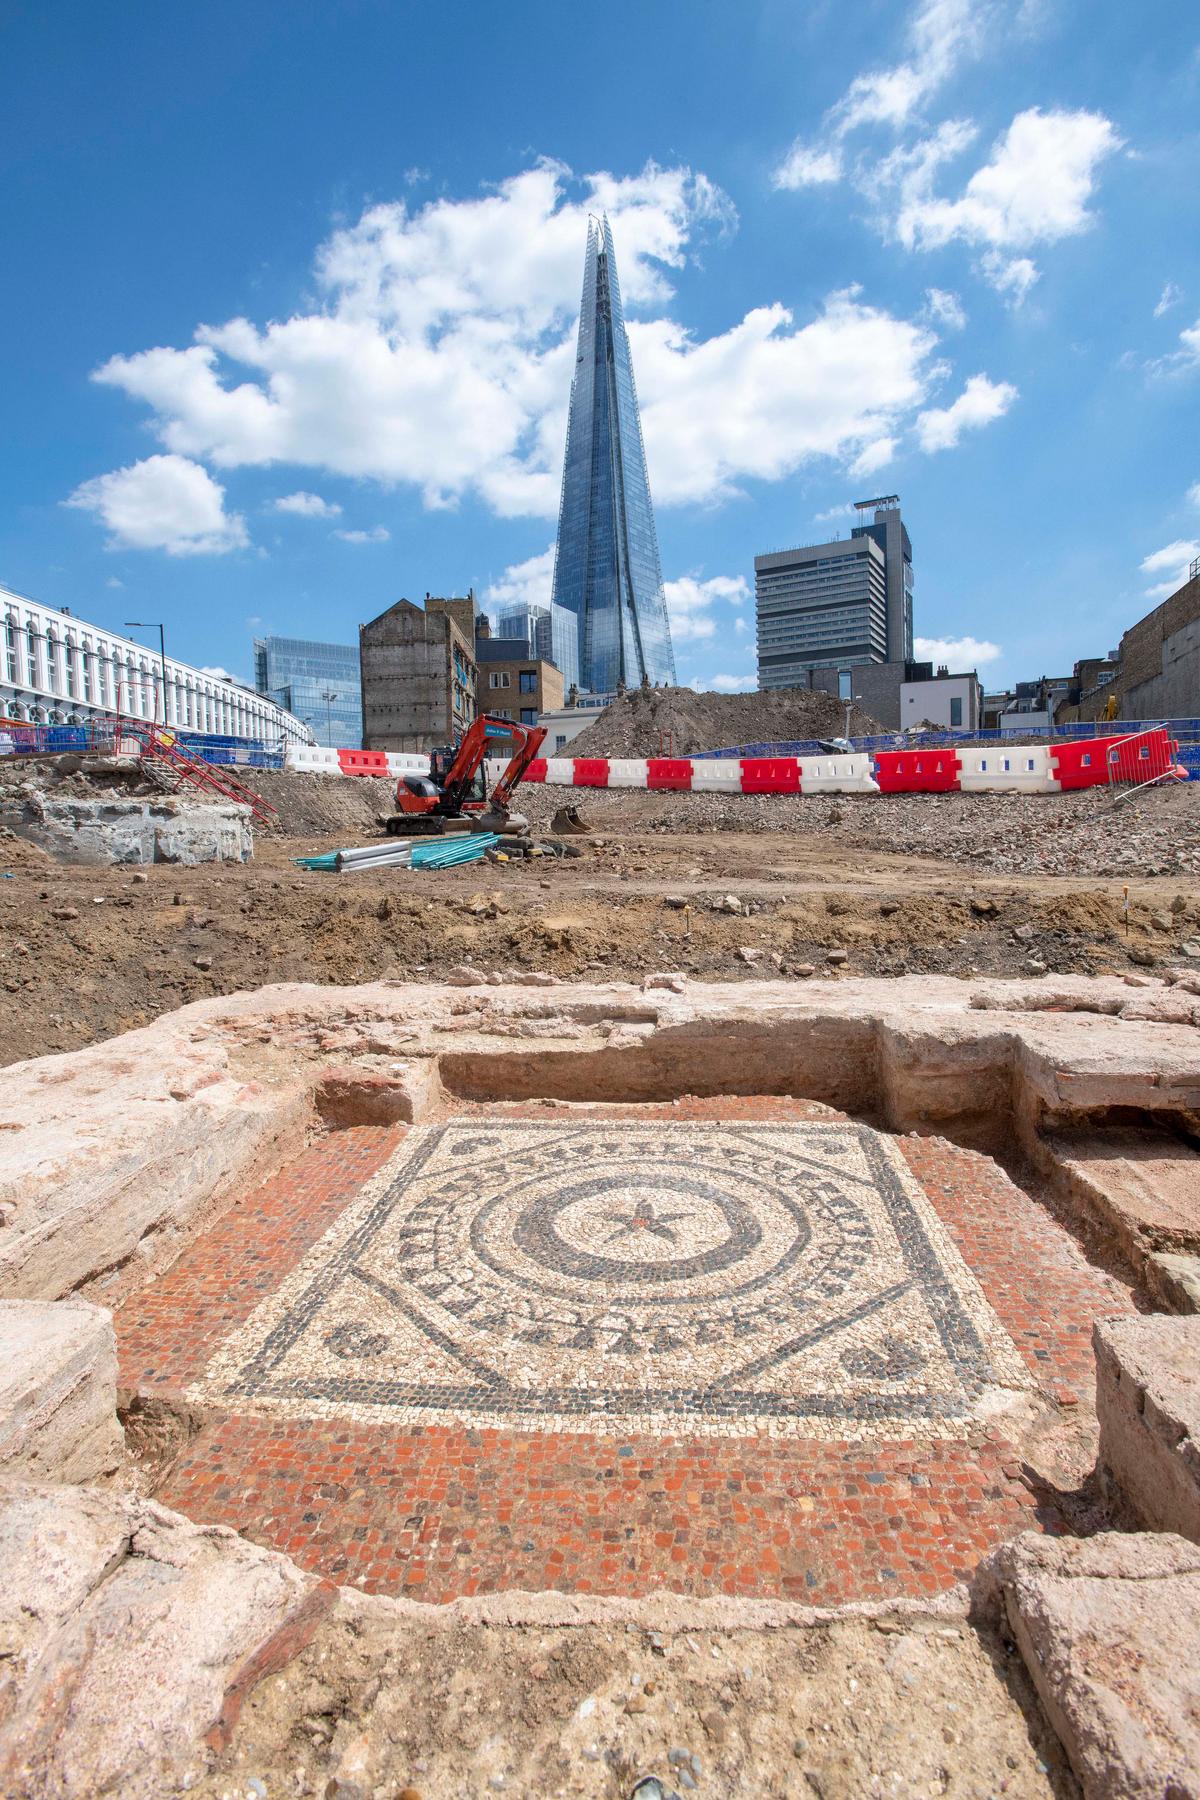 A Roman mosaic in a Roman mausoleum is seen below the City of London skyline. (© MOLA)